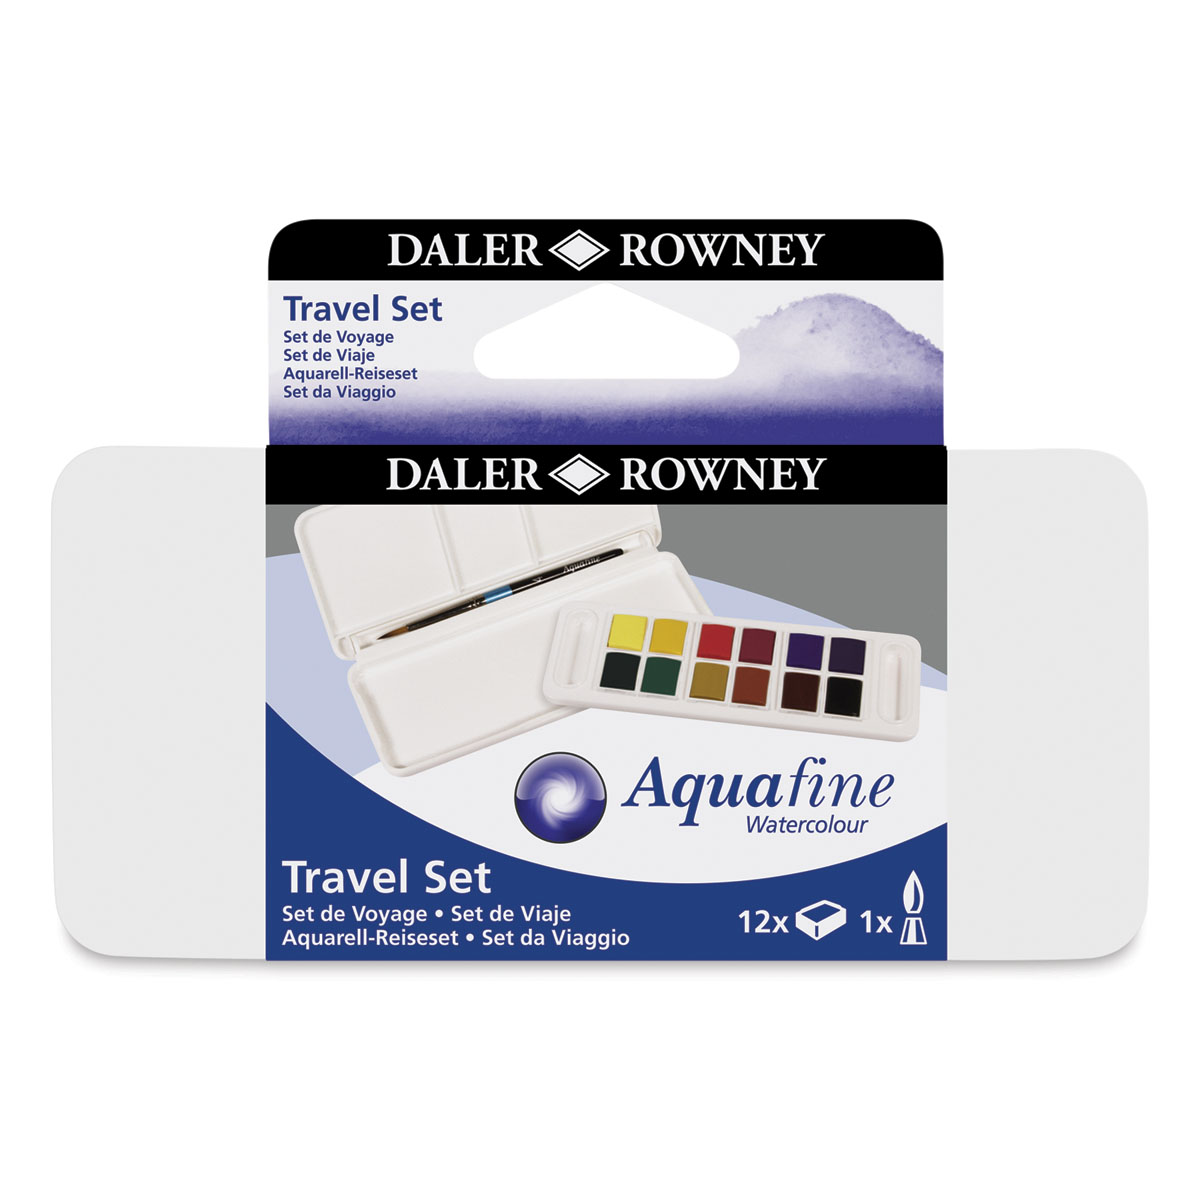  Daler Rowney Aquafine 12-pc Watercolor Travel Set